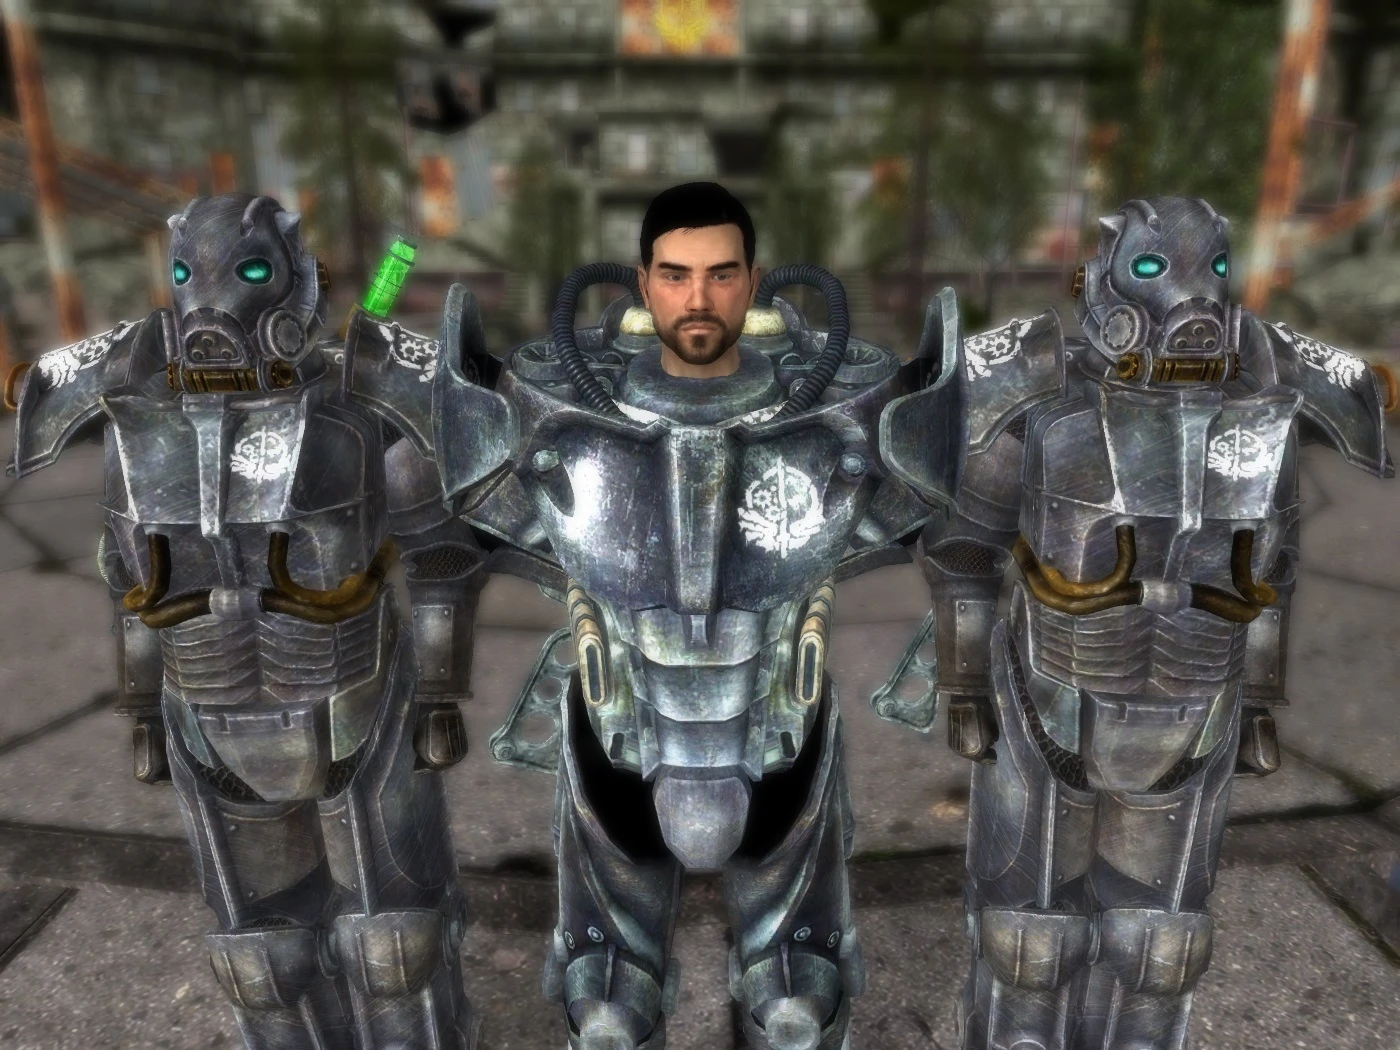 enclave power armor vs brotherhood power armor